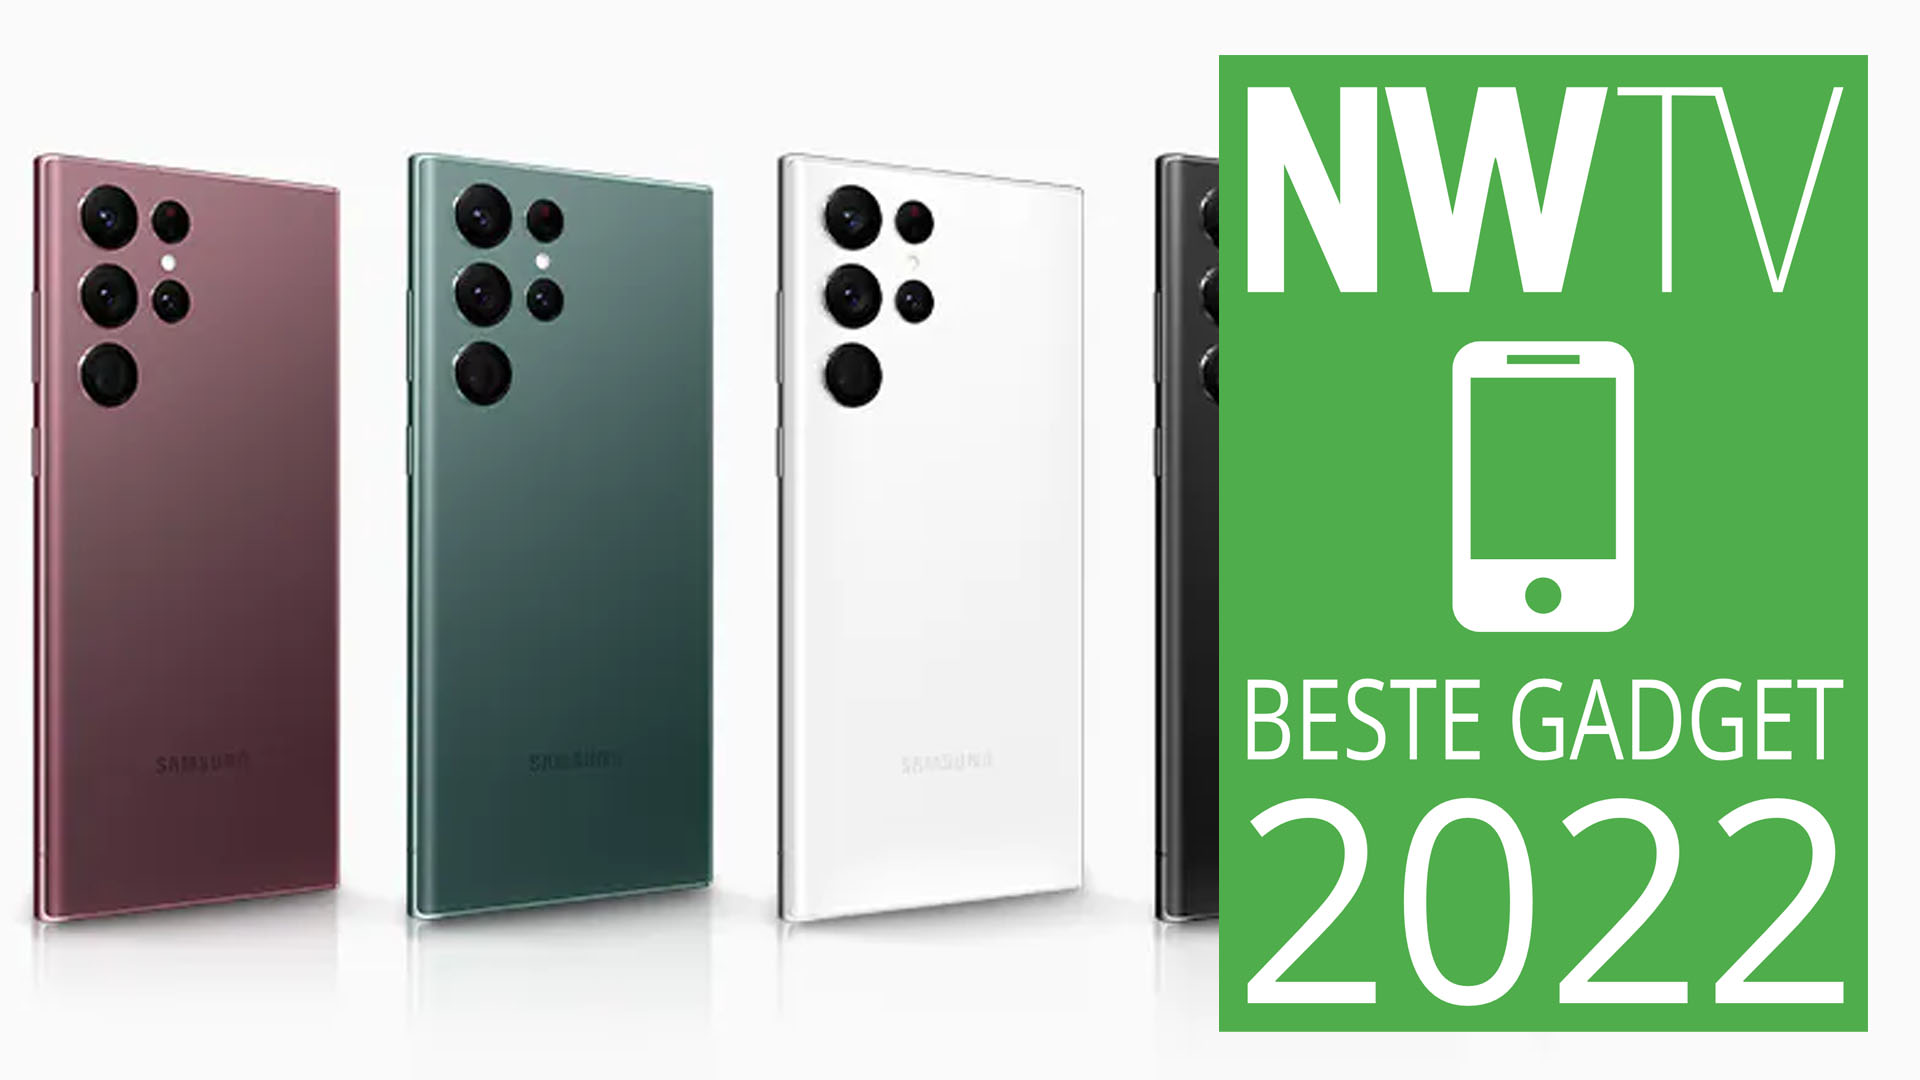 NWTV-Awards 2022: De Samsung Galaxy S22 Ultra is de beste gadget van 2022